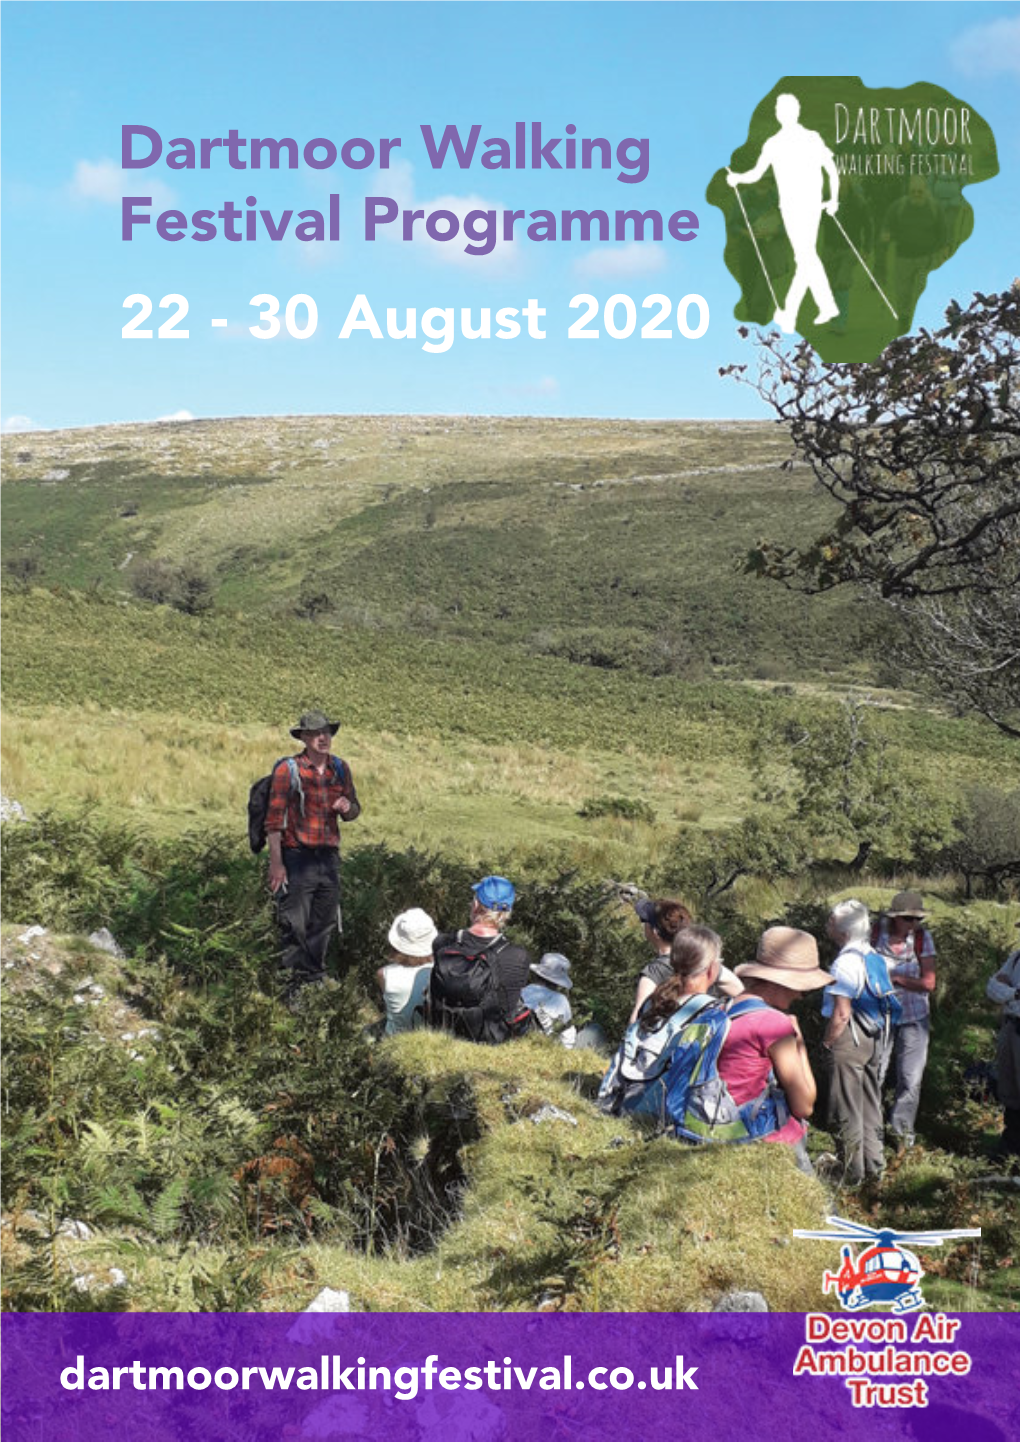 Dartmoor Walking Festival Programme 22 - 30 August 2020